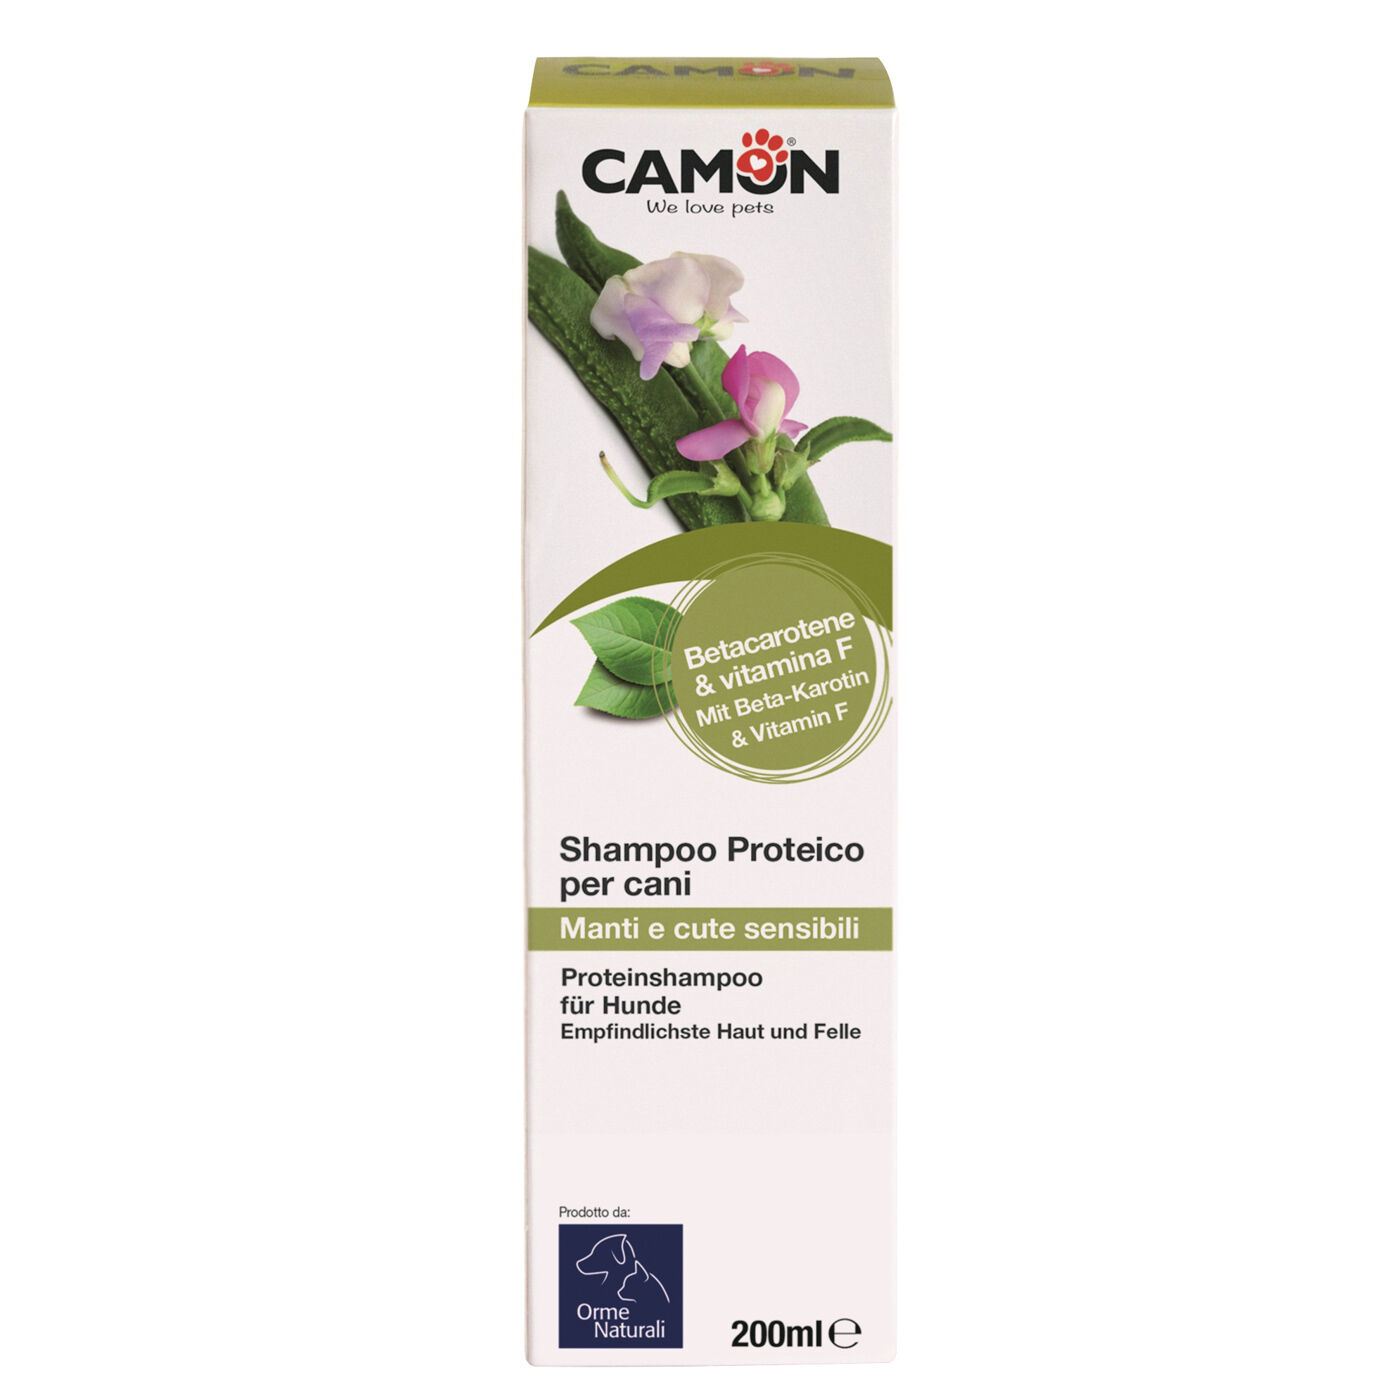 Camon-shampoo-protein-fuer-hunde-CO-G802